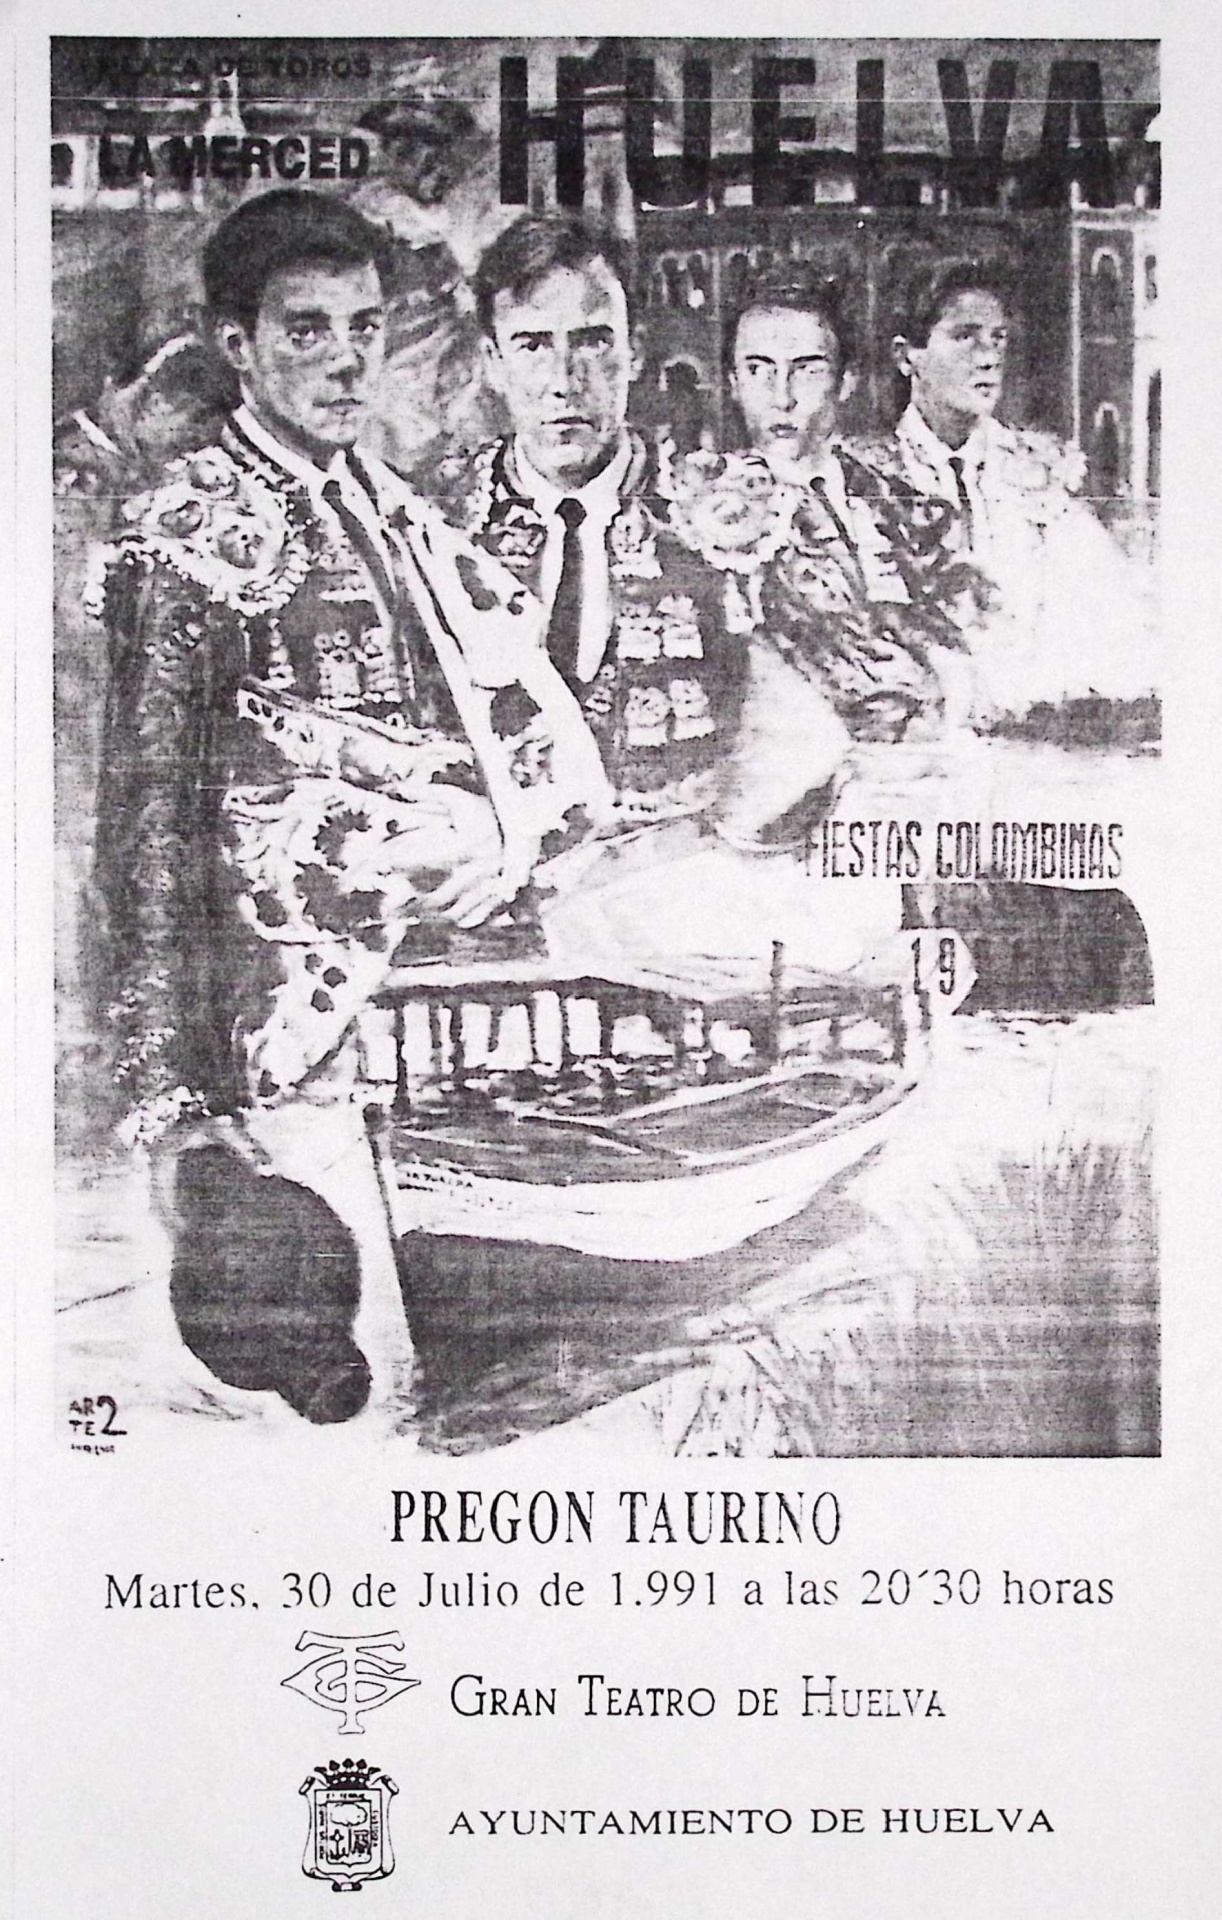 Pregón Taurino